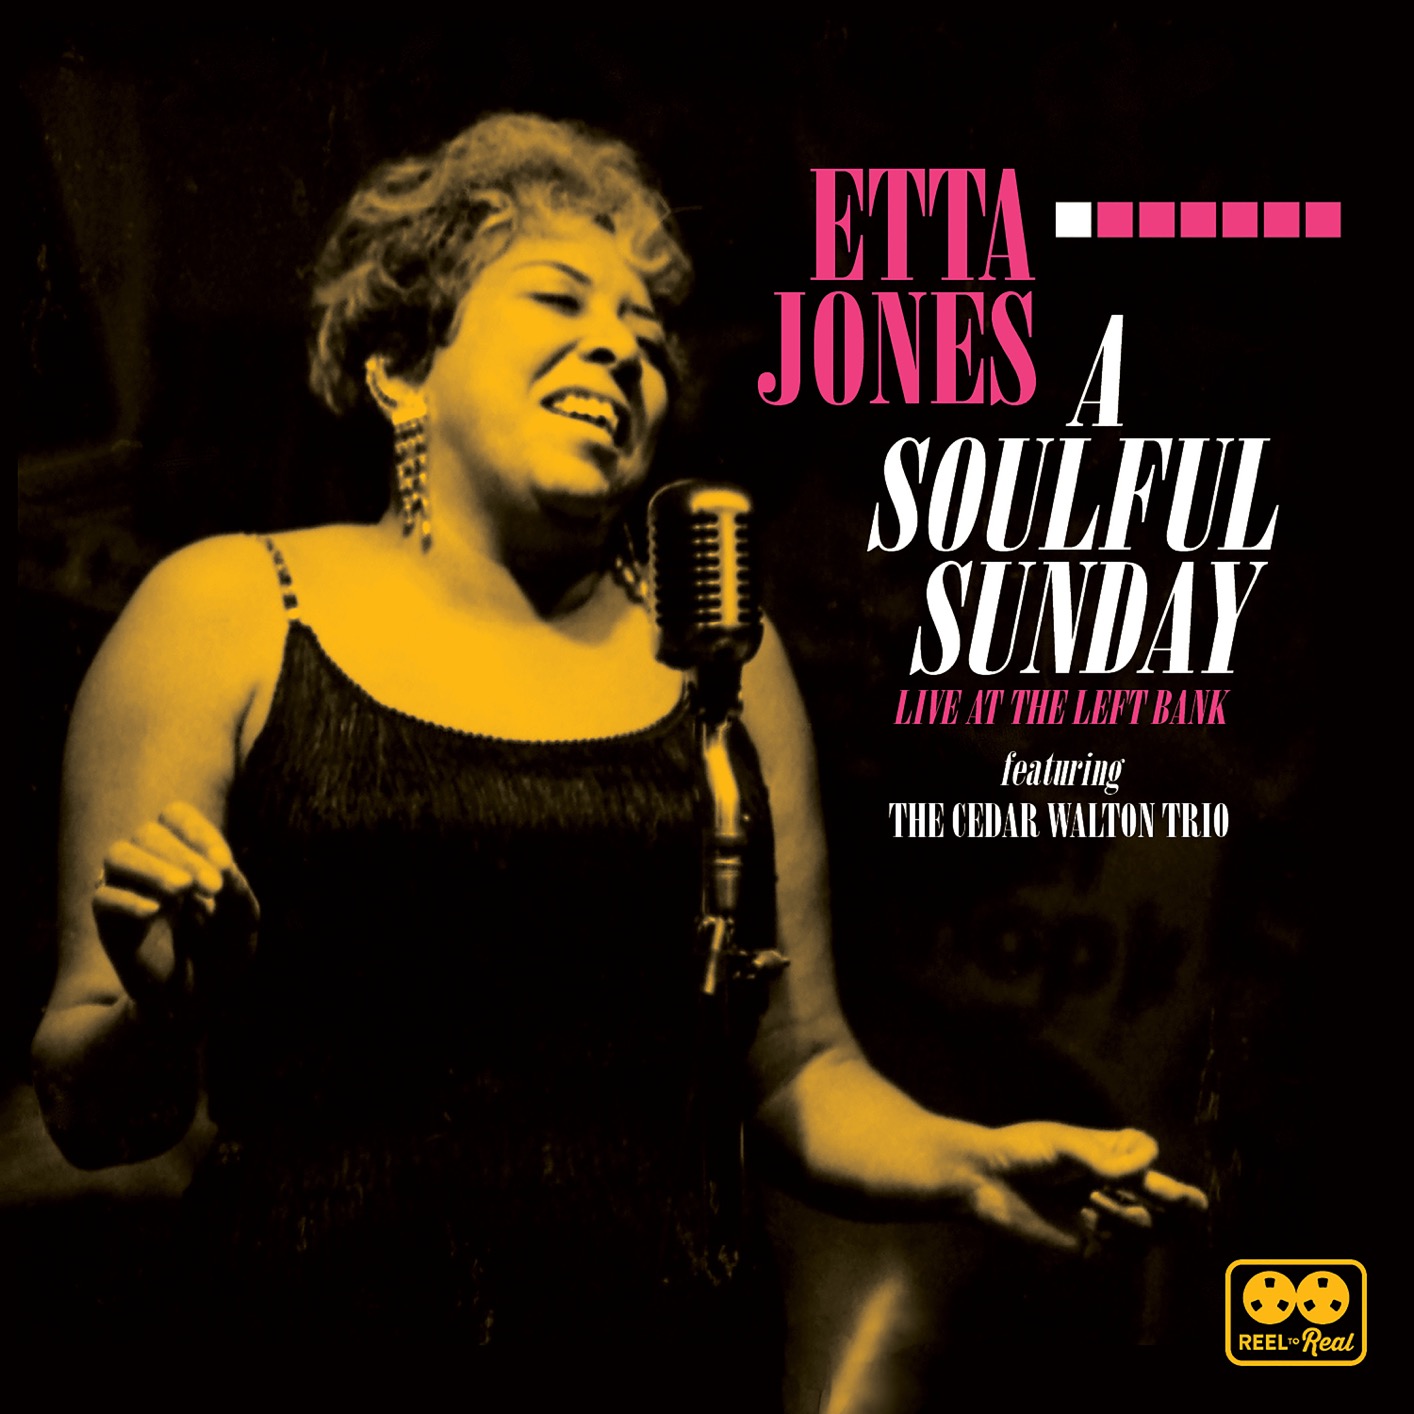 Etta Jones feat. The Cedar Walton Trio - A Soulful Sunday - Live at the Left Bank (Remastered) (2019) [FLAC 24bit/96kHz]